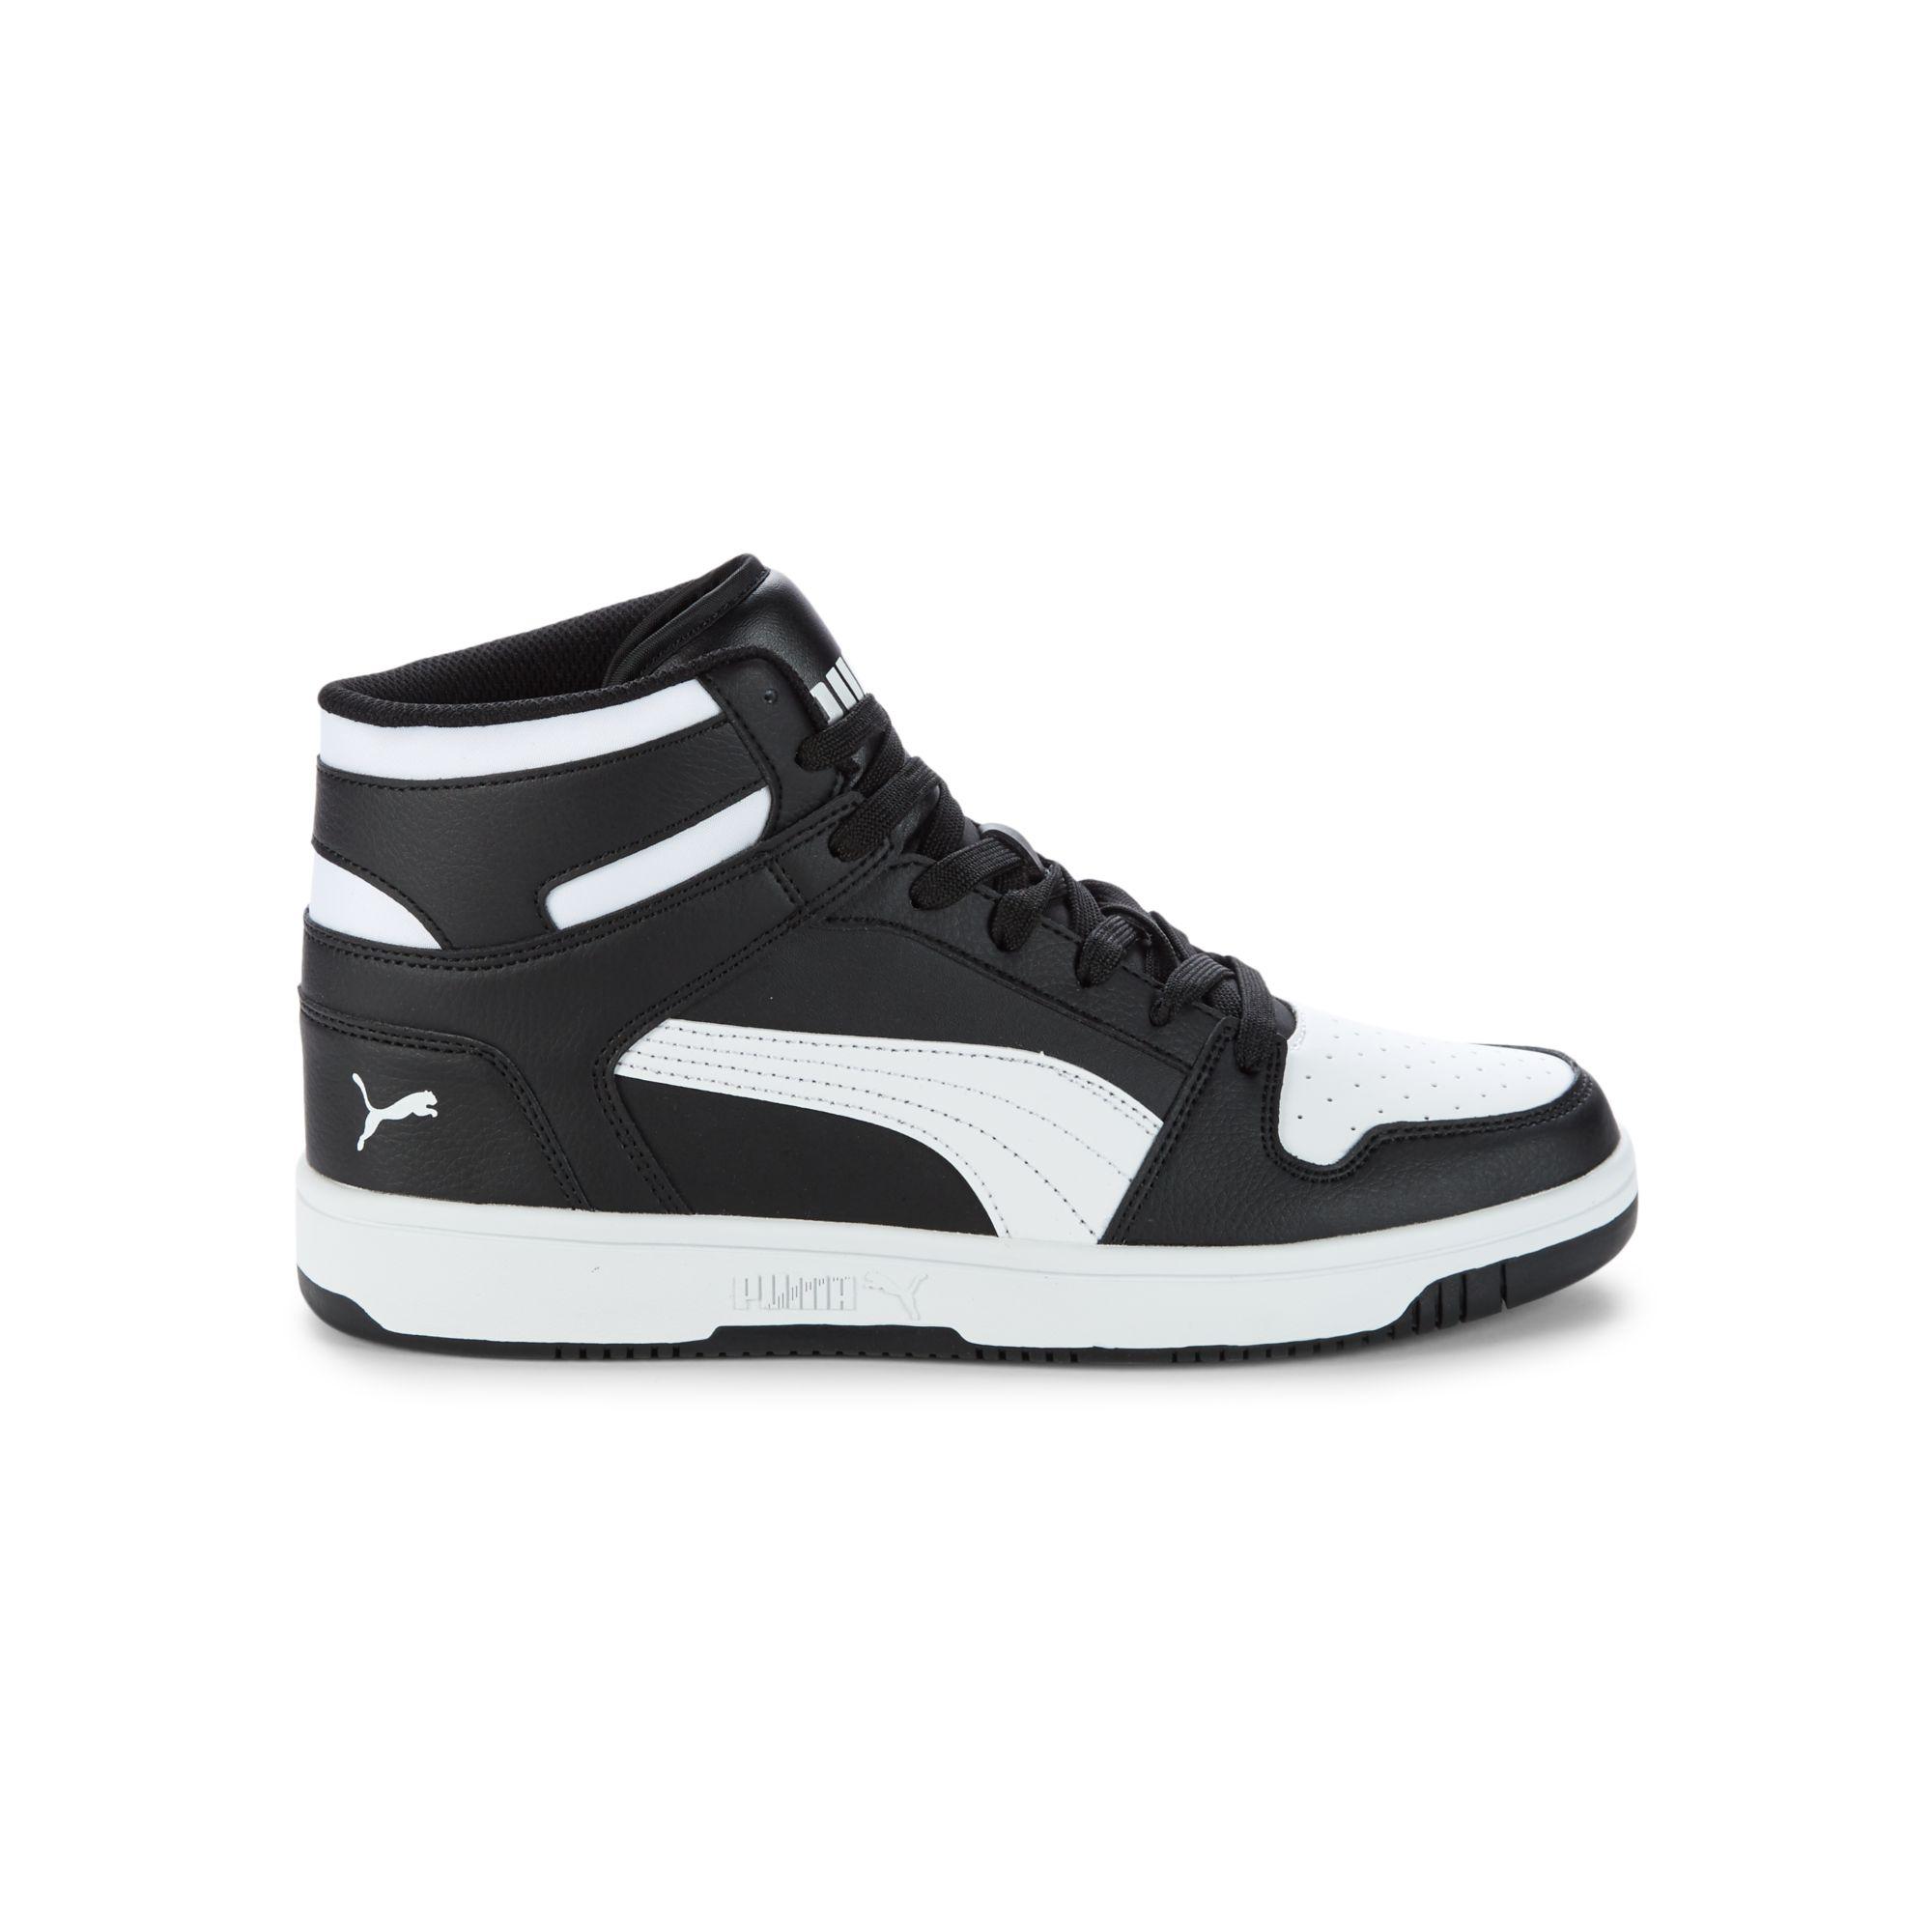 PUMA Rebound Layup Sneakers in Black- White (Black) for Men - Save 64% -  Lyst